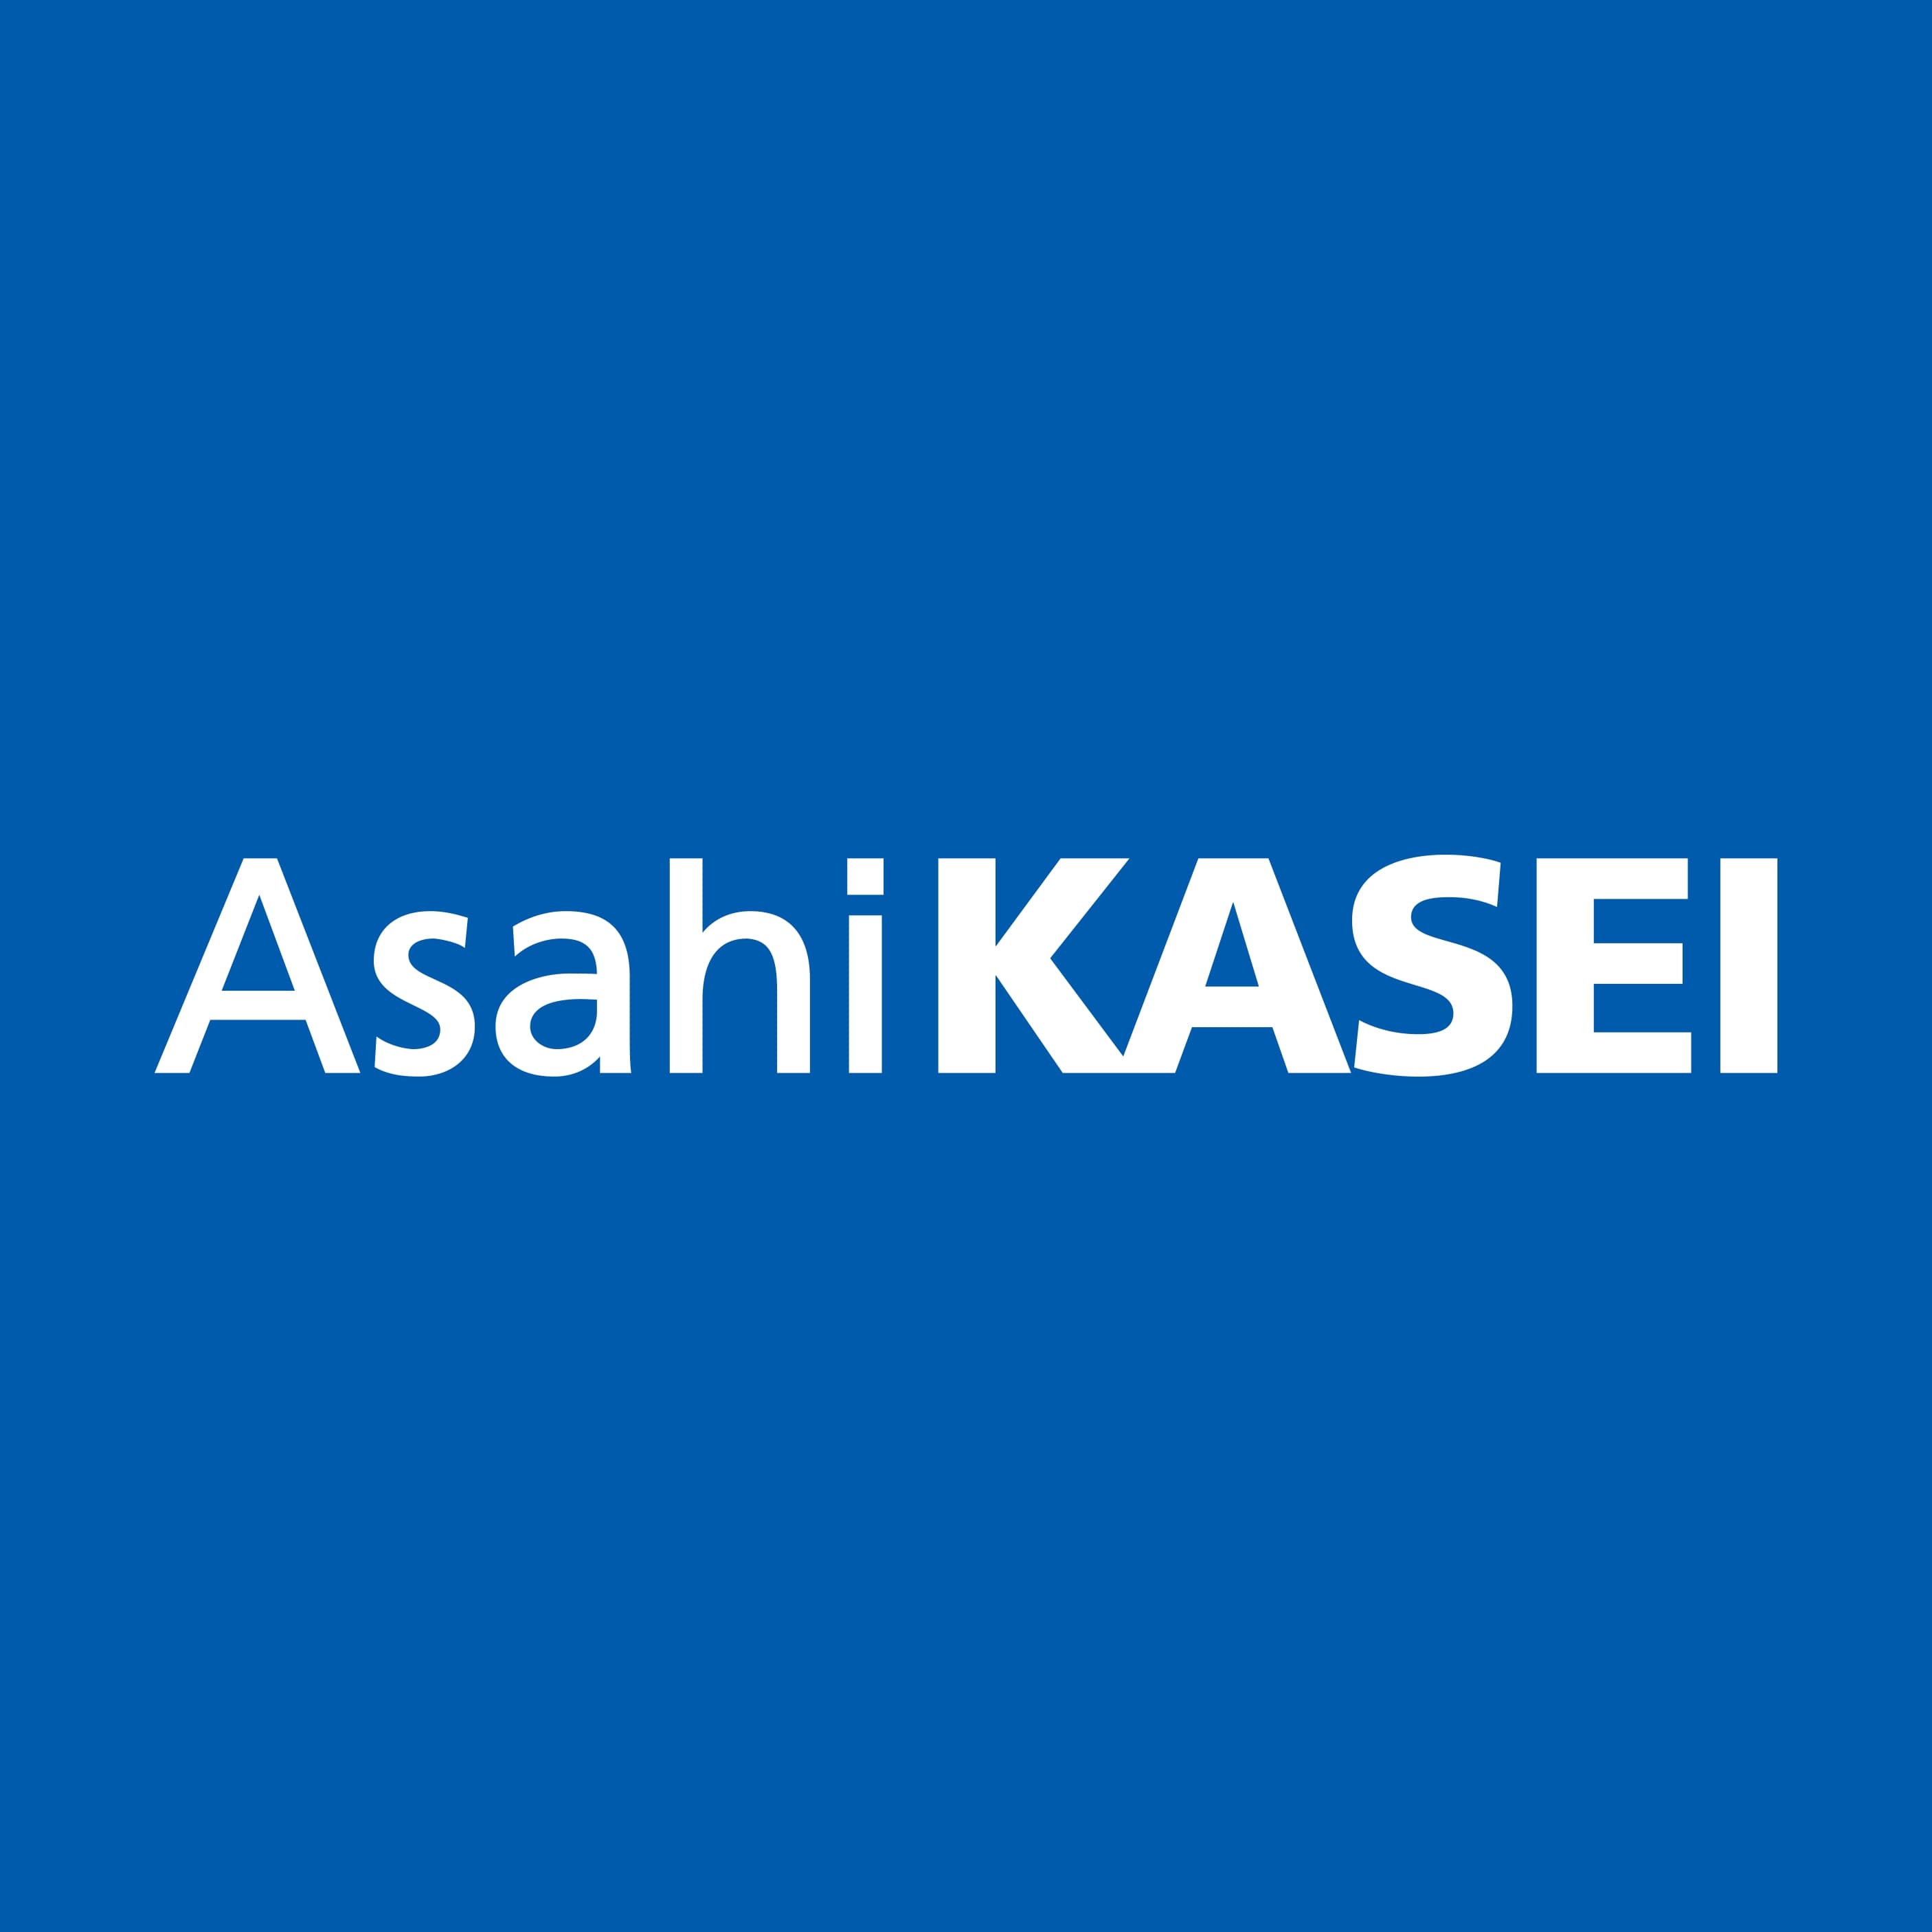 asahikasei-logo-blue-square